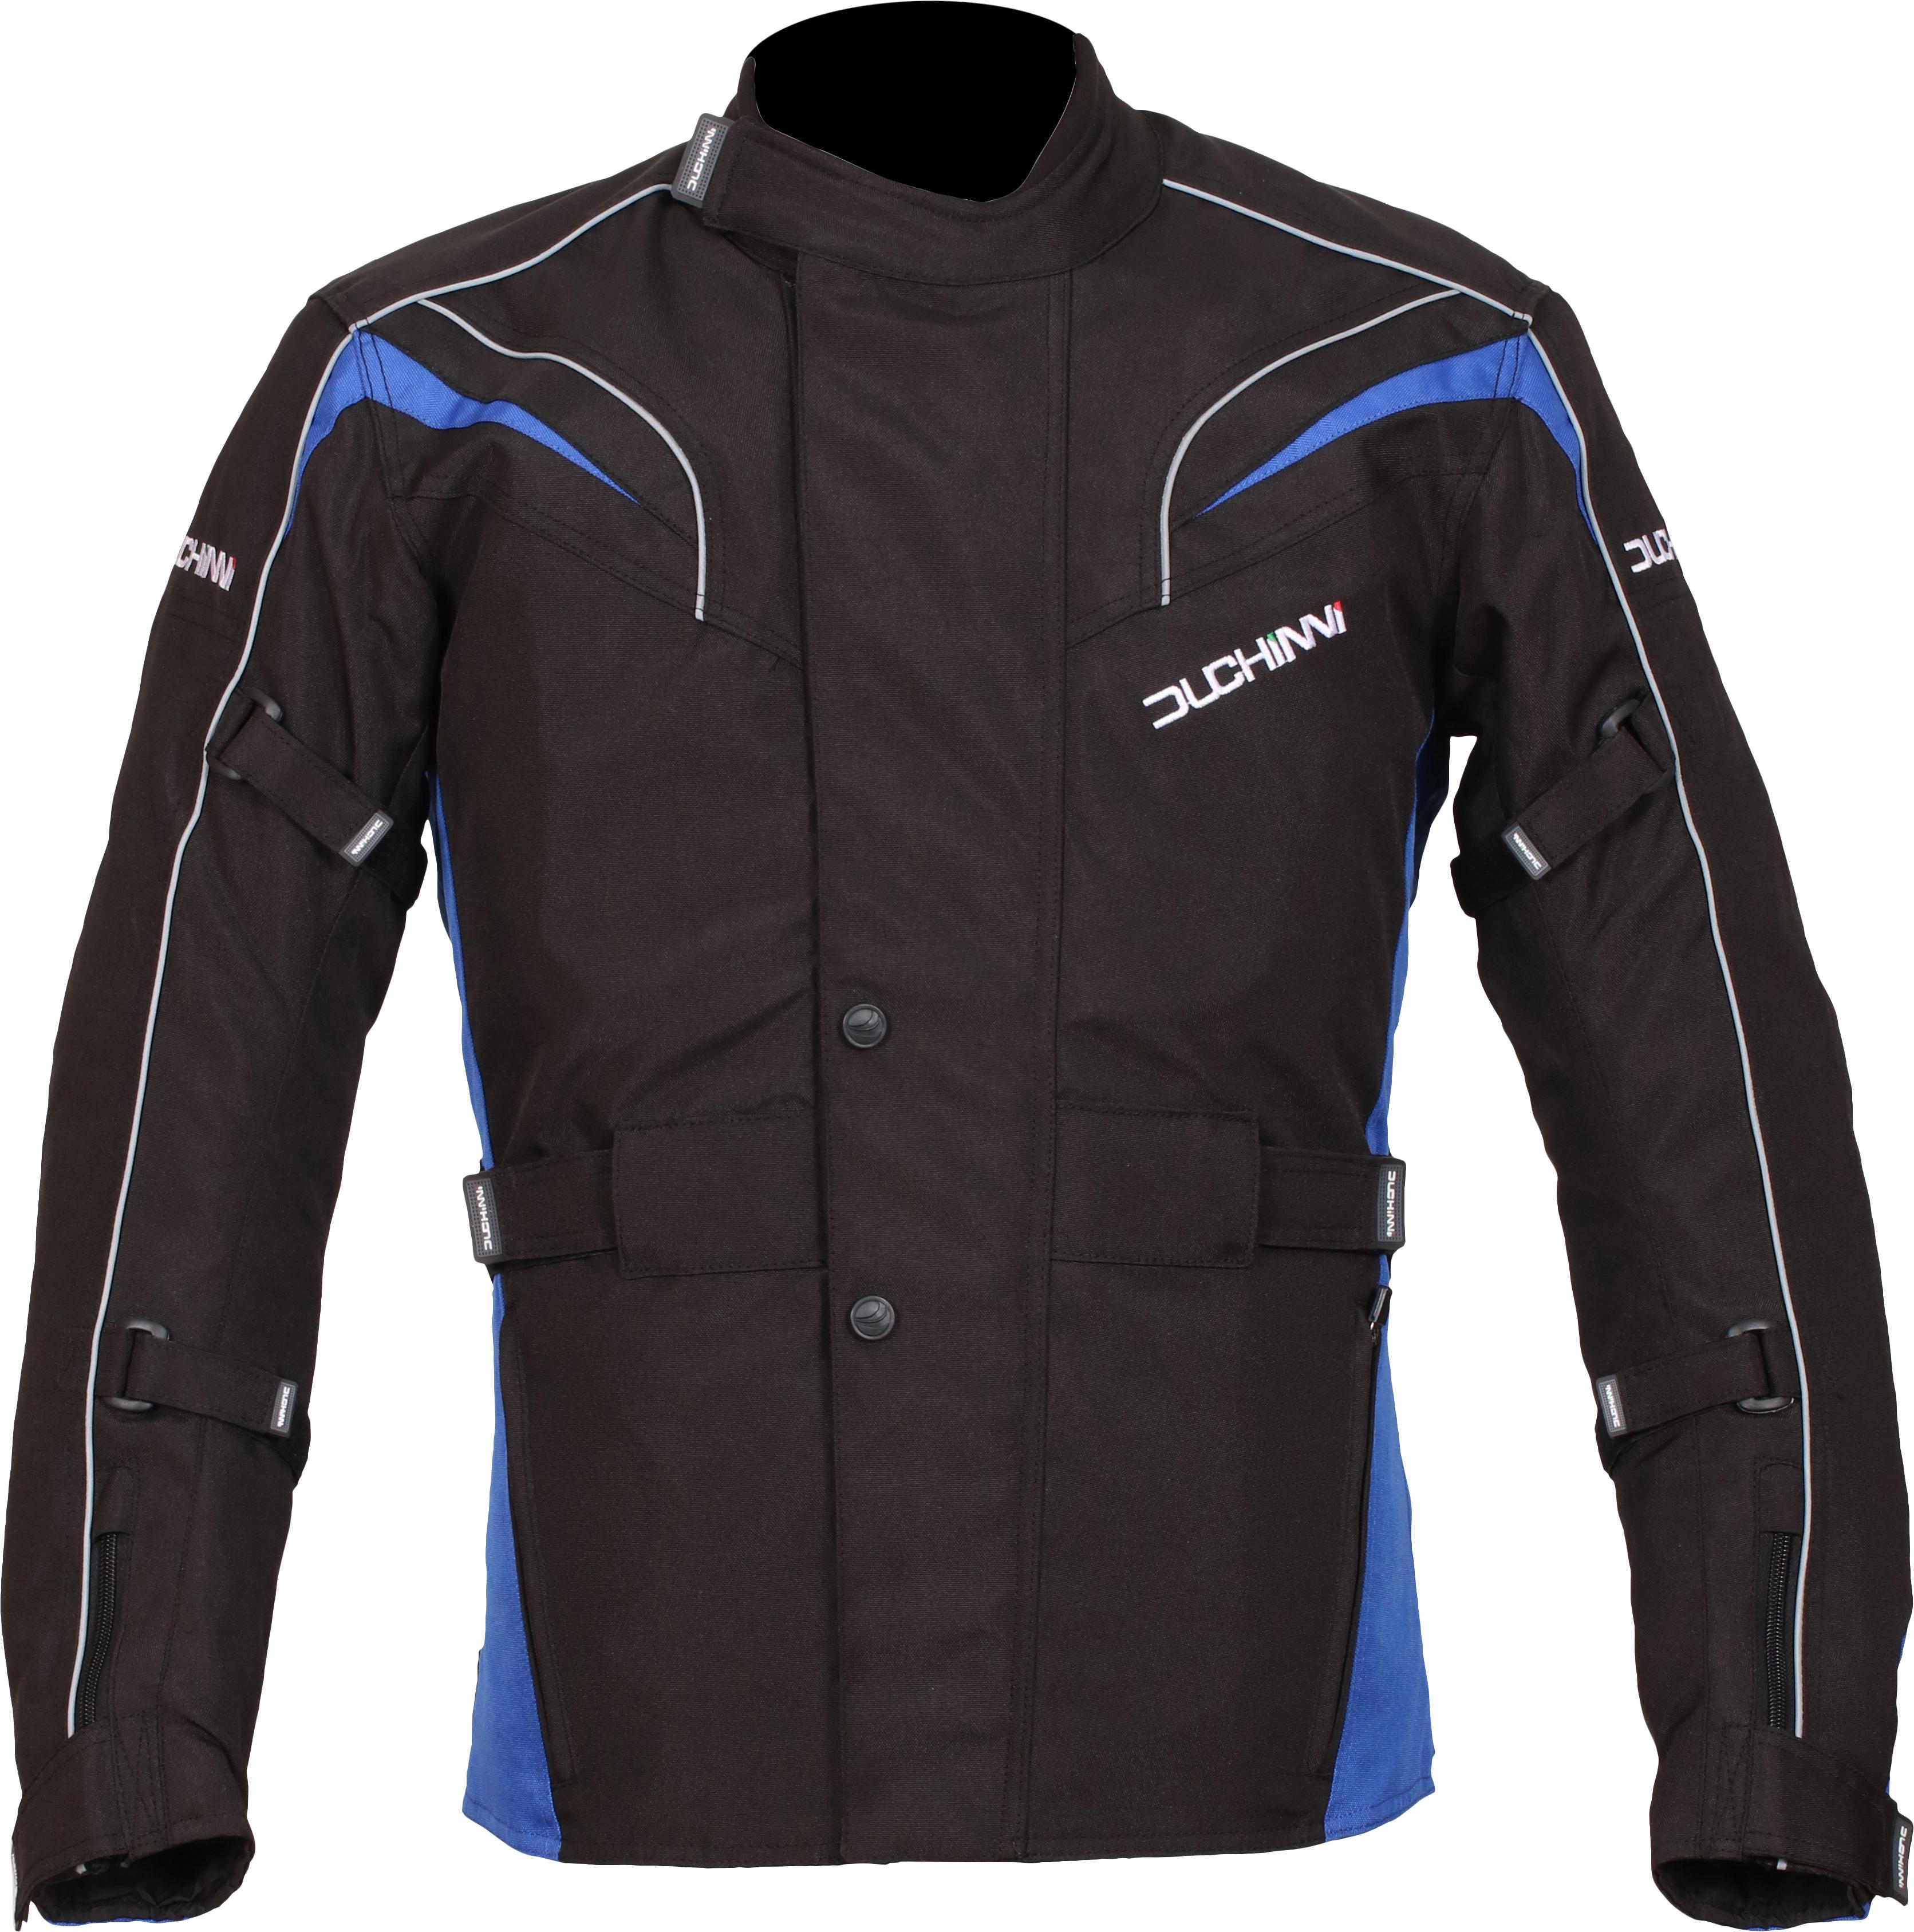 Duchinni Hurricane Motorcycle Jacket - Black And Blue, Xl